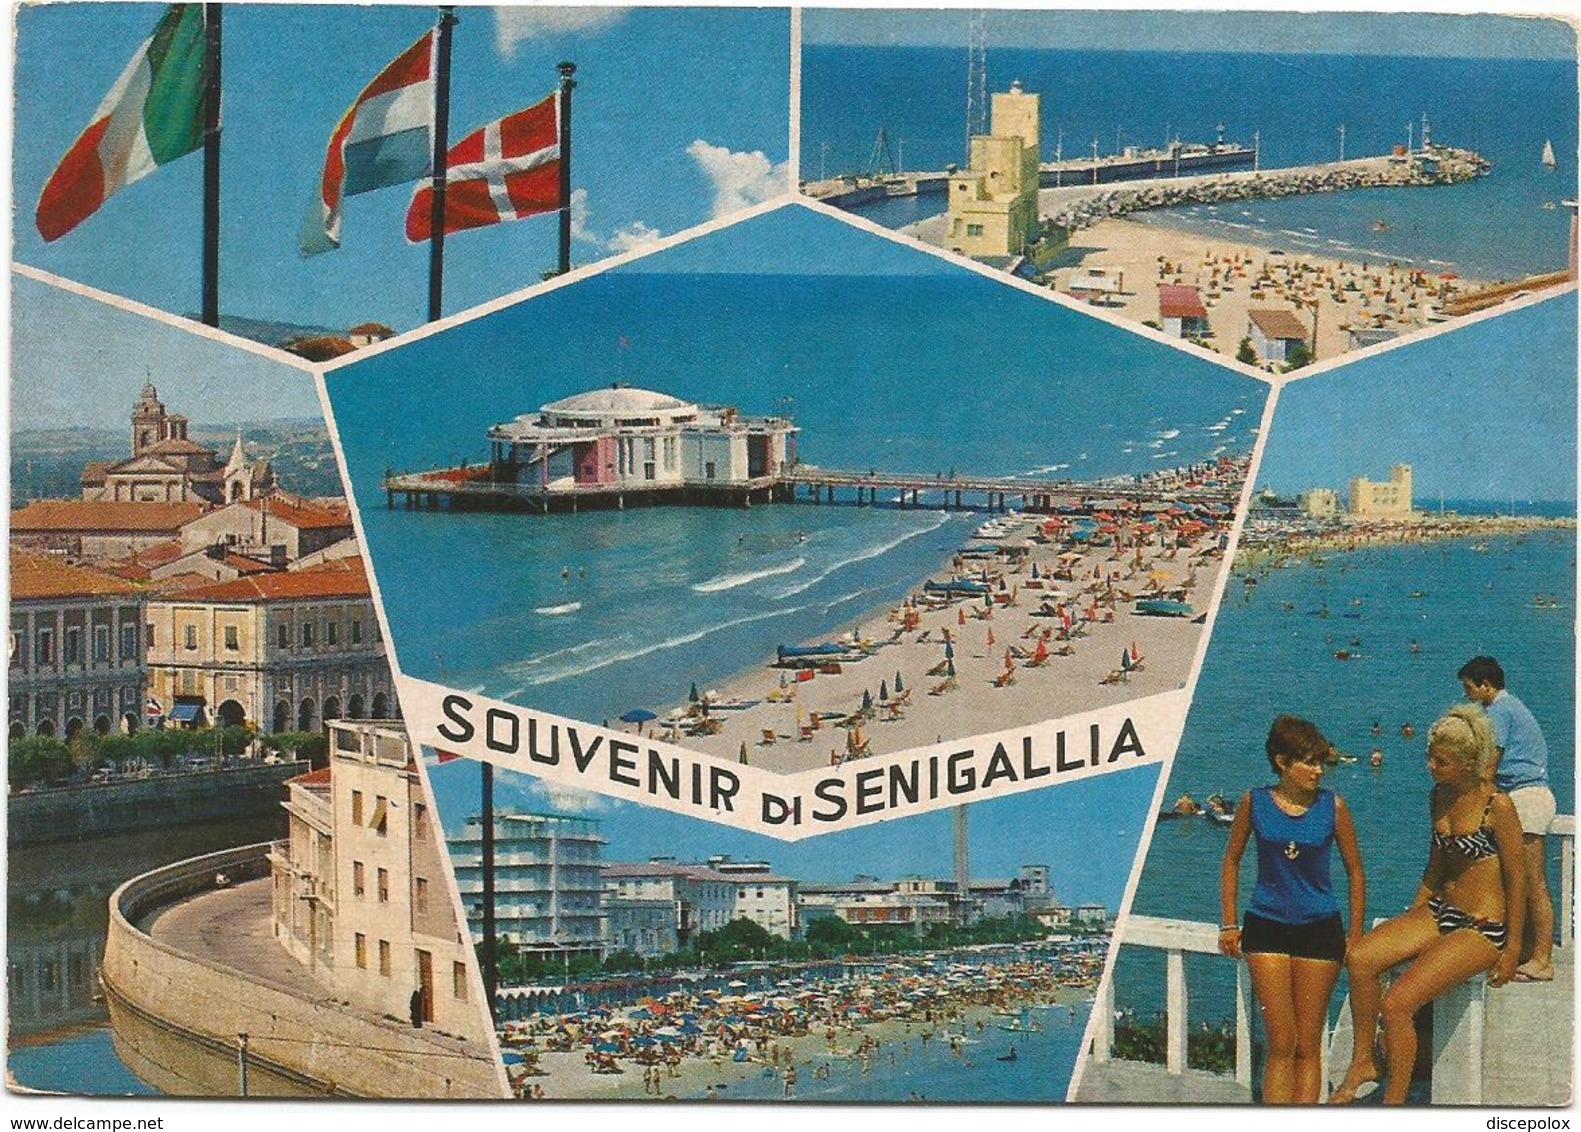 Z5253 Souvenir Di Senigallia (Ancona) - Ragazza Girl Femme Frau Chica Pin Up / Viaggiata 1979 - Pin-Ups